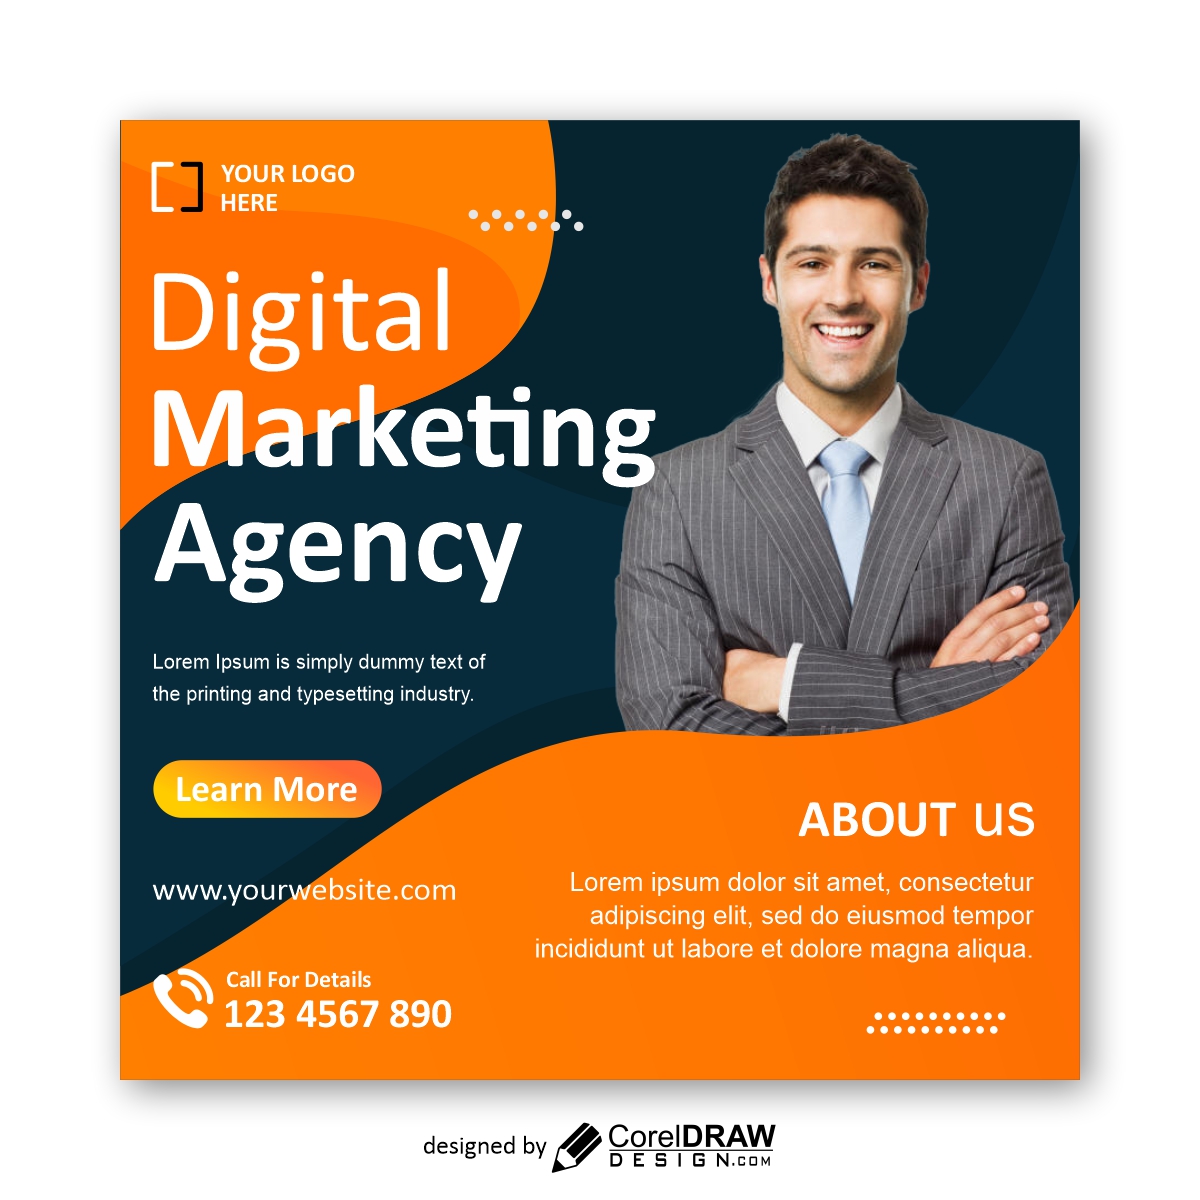 digital marketing agency poster vector design download for free